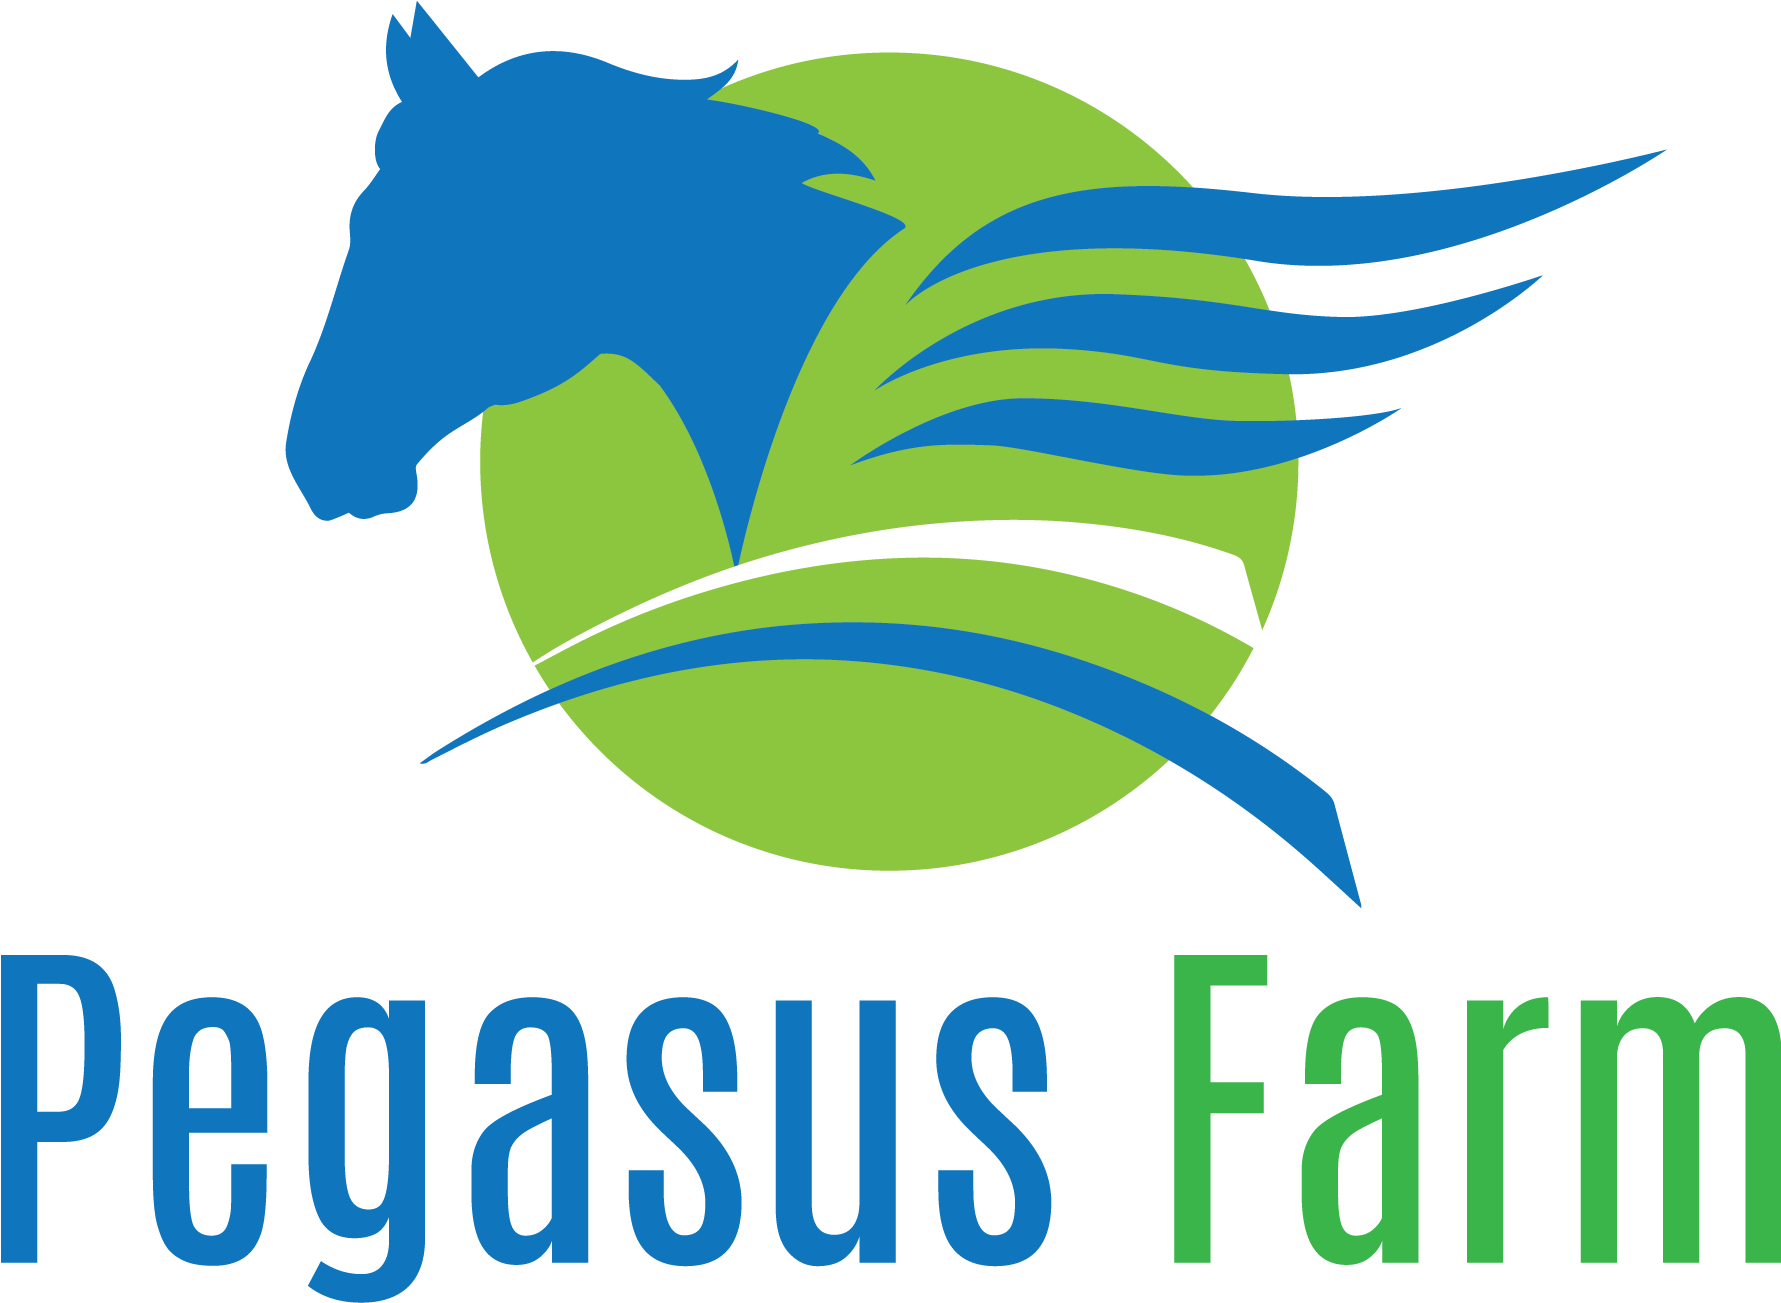 December 11, 2017 - Pegasus Farm Clipart (2100x1800), Png Download